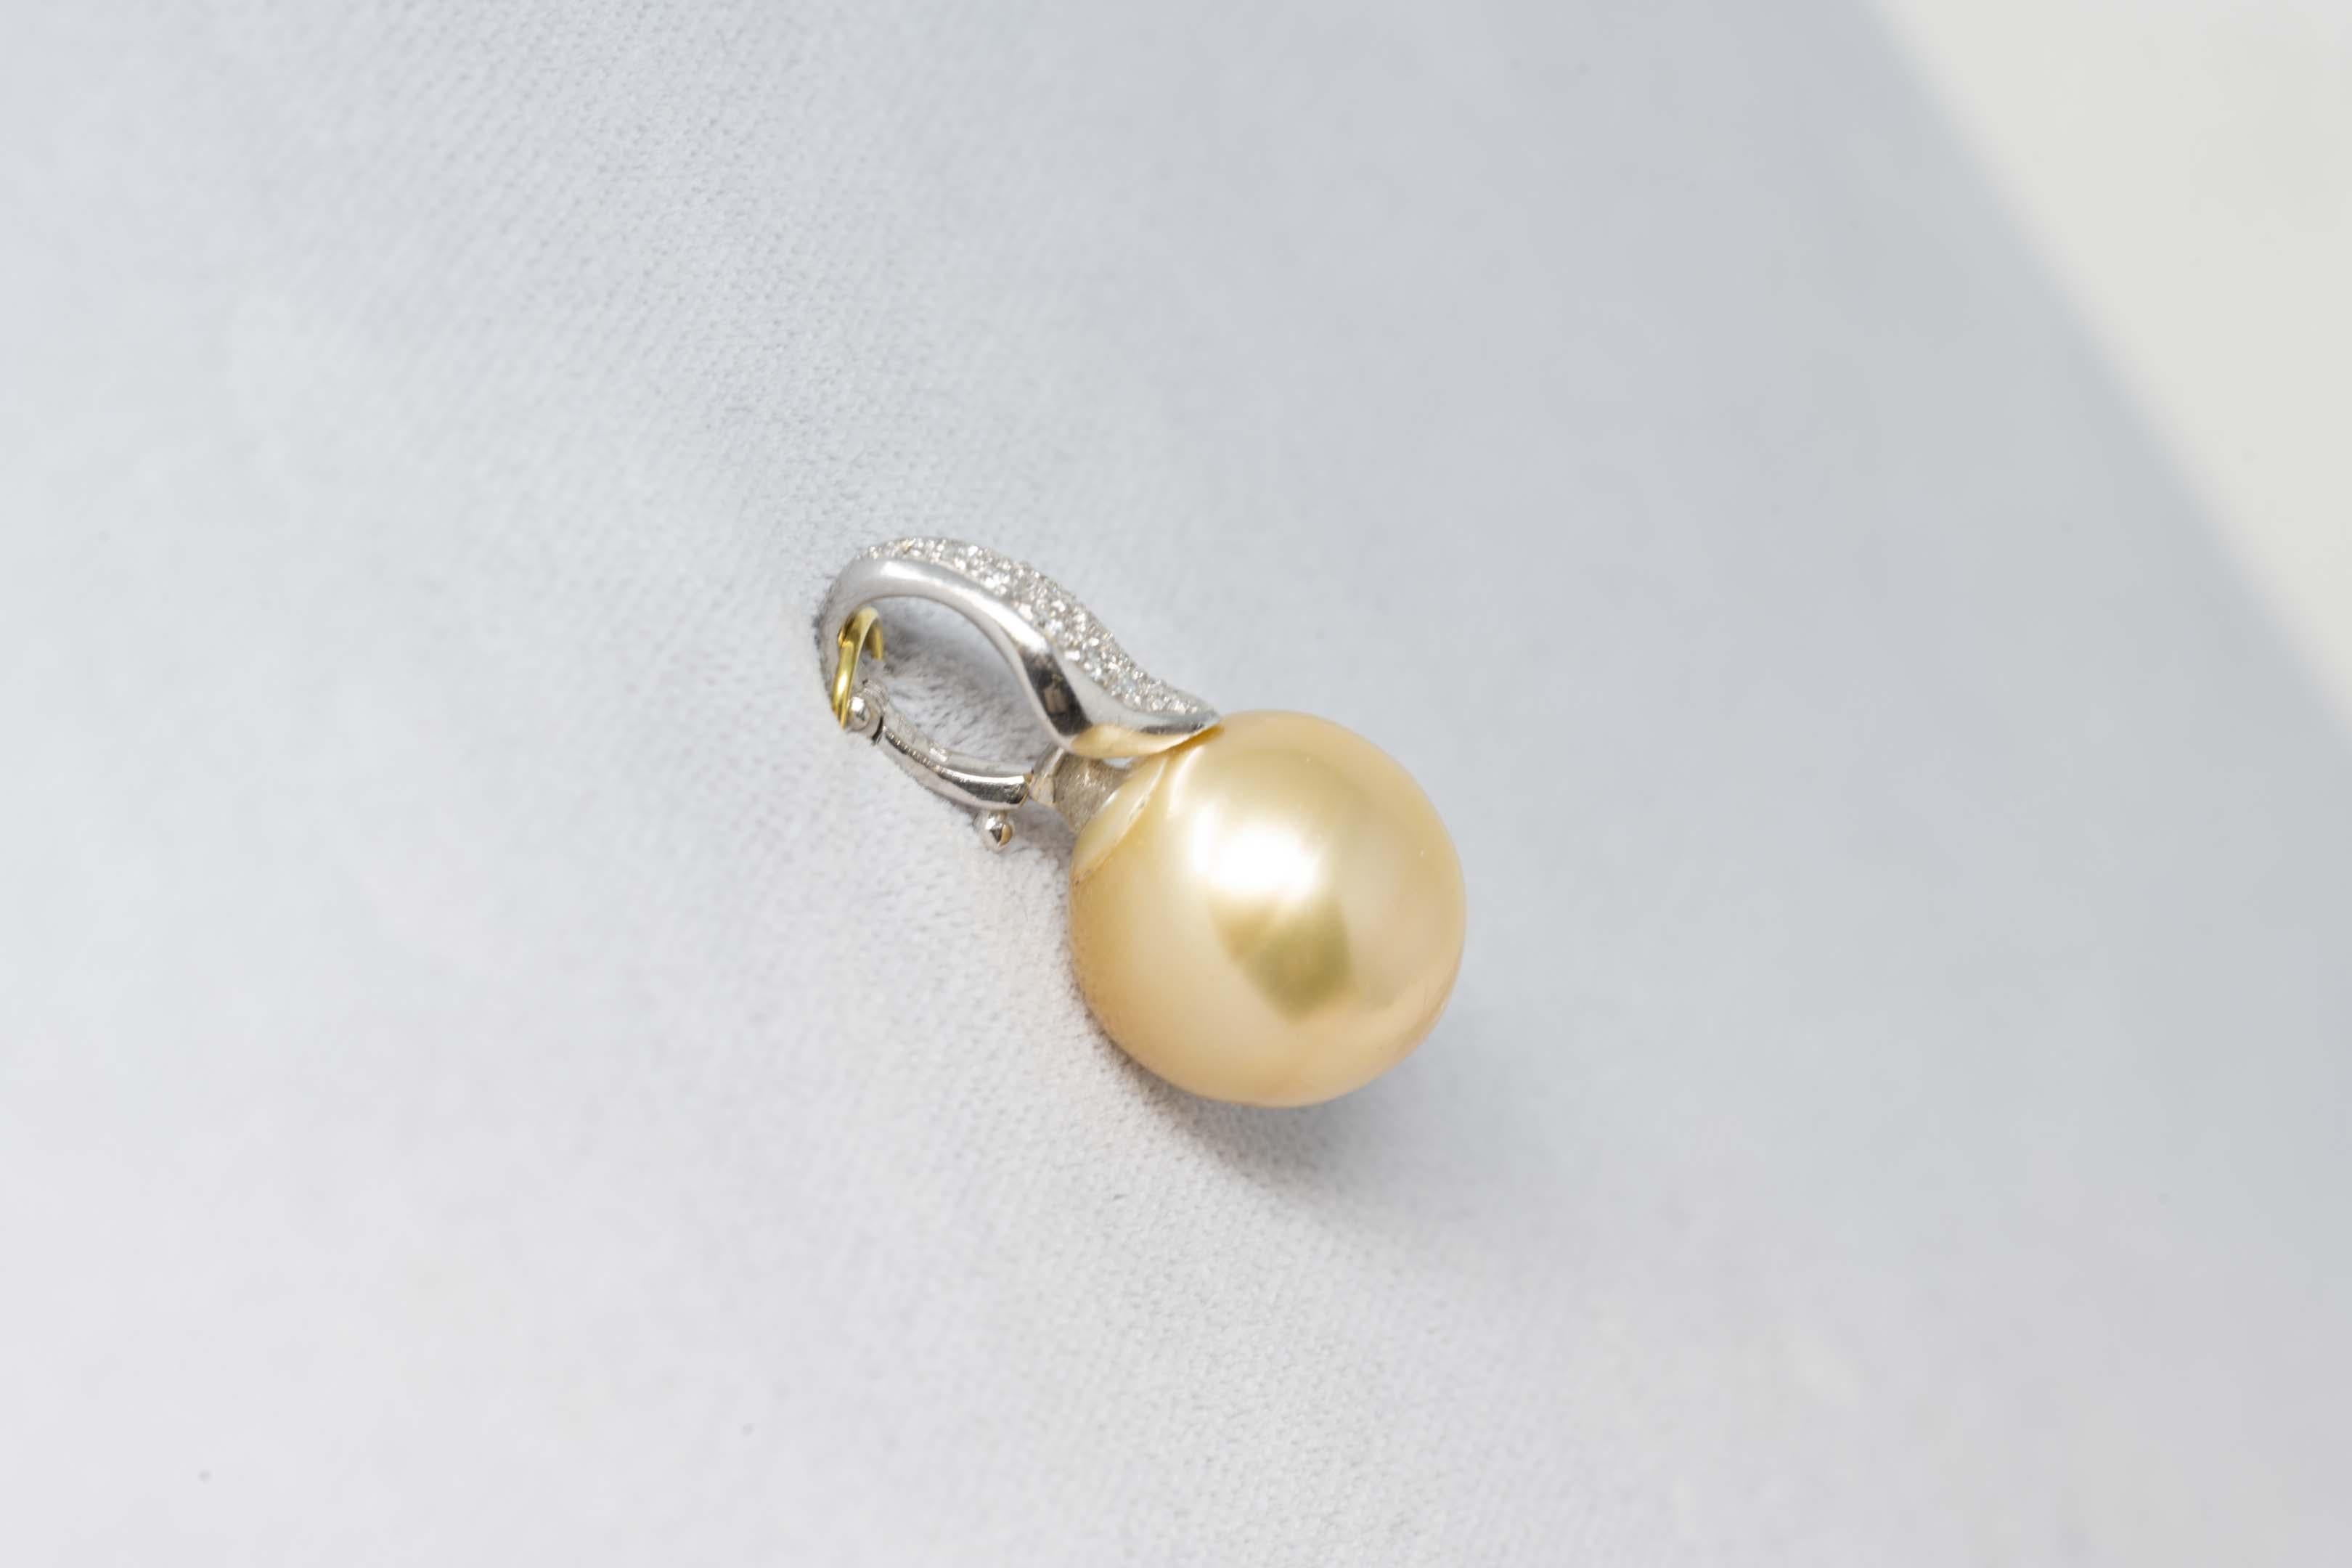 JKa Kohle & Co 18k white gold pendant w/ 14mm pearls and diamonds. With 14mm Akoya pearls and 15 diamonds. Made in Germany, circa 1970.